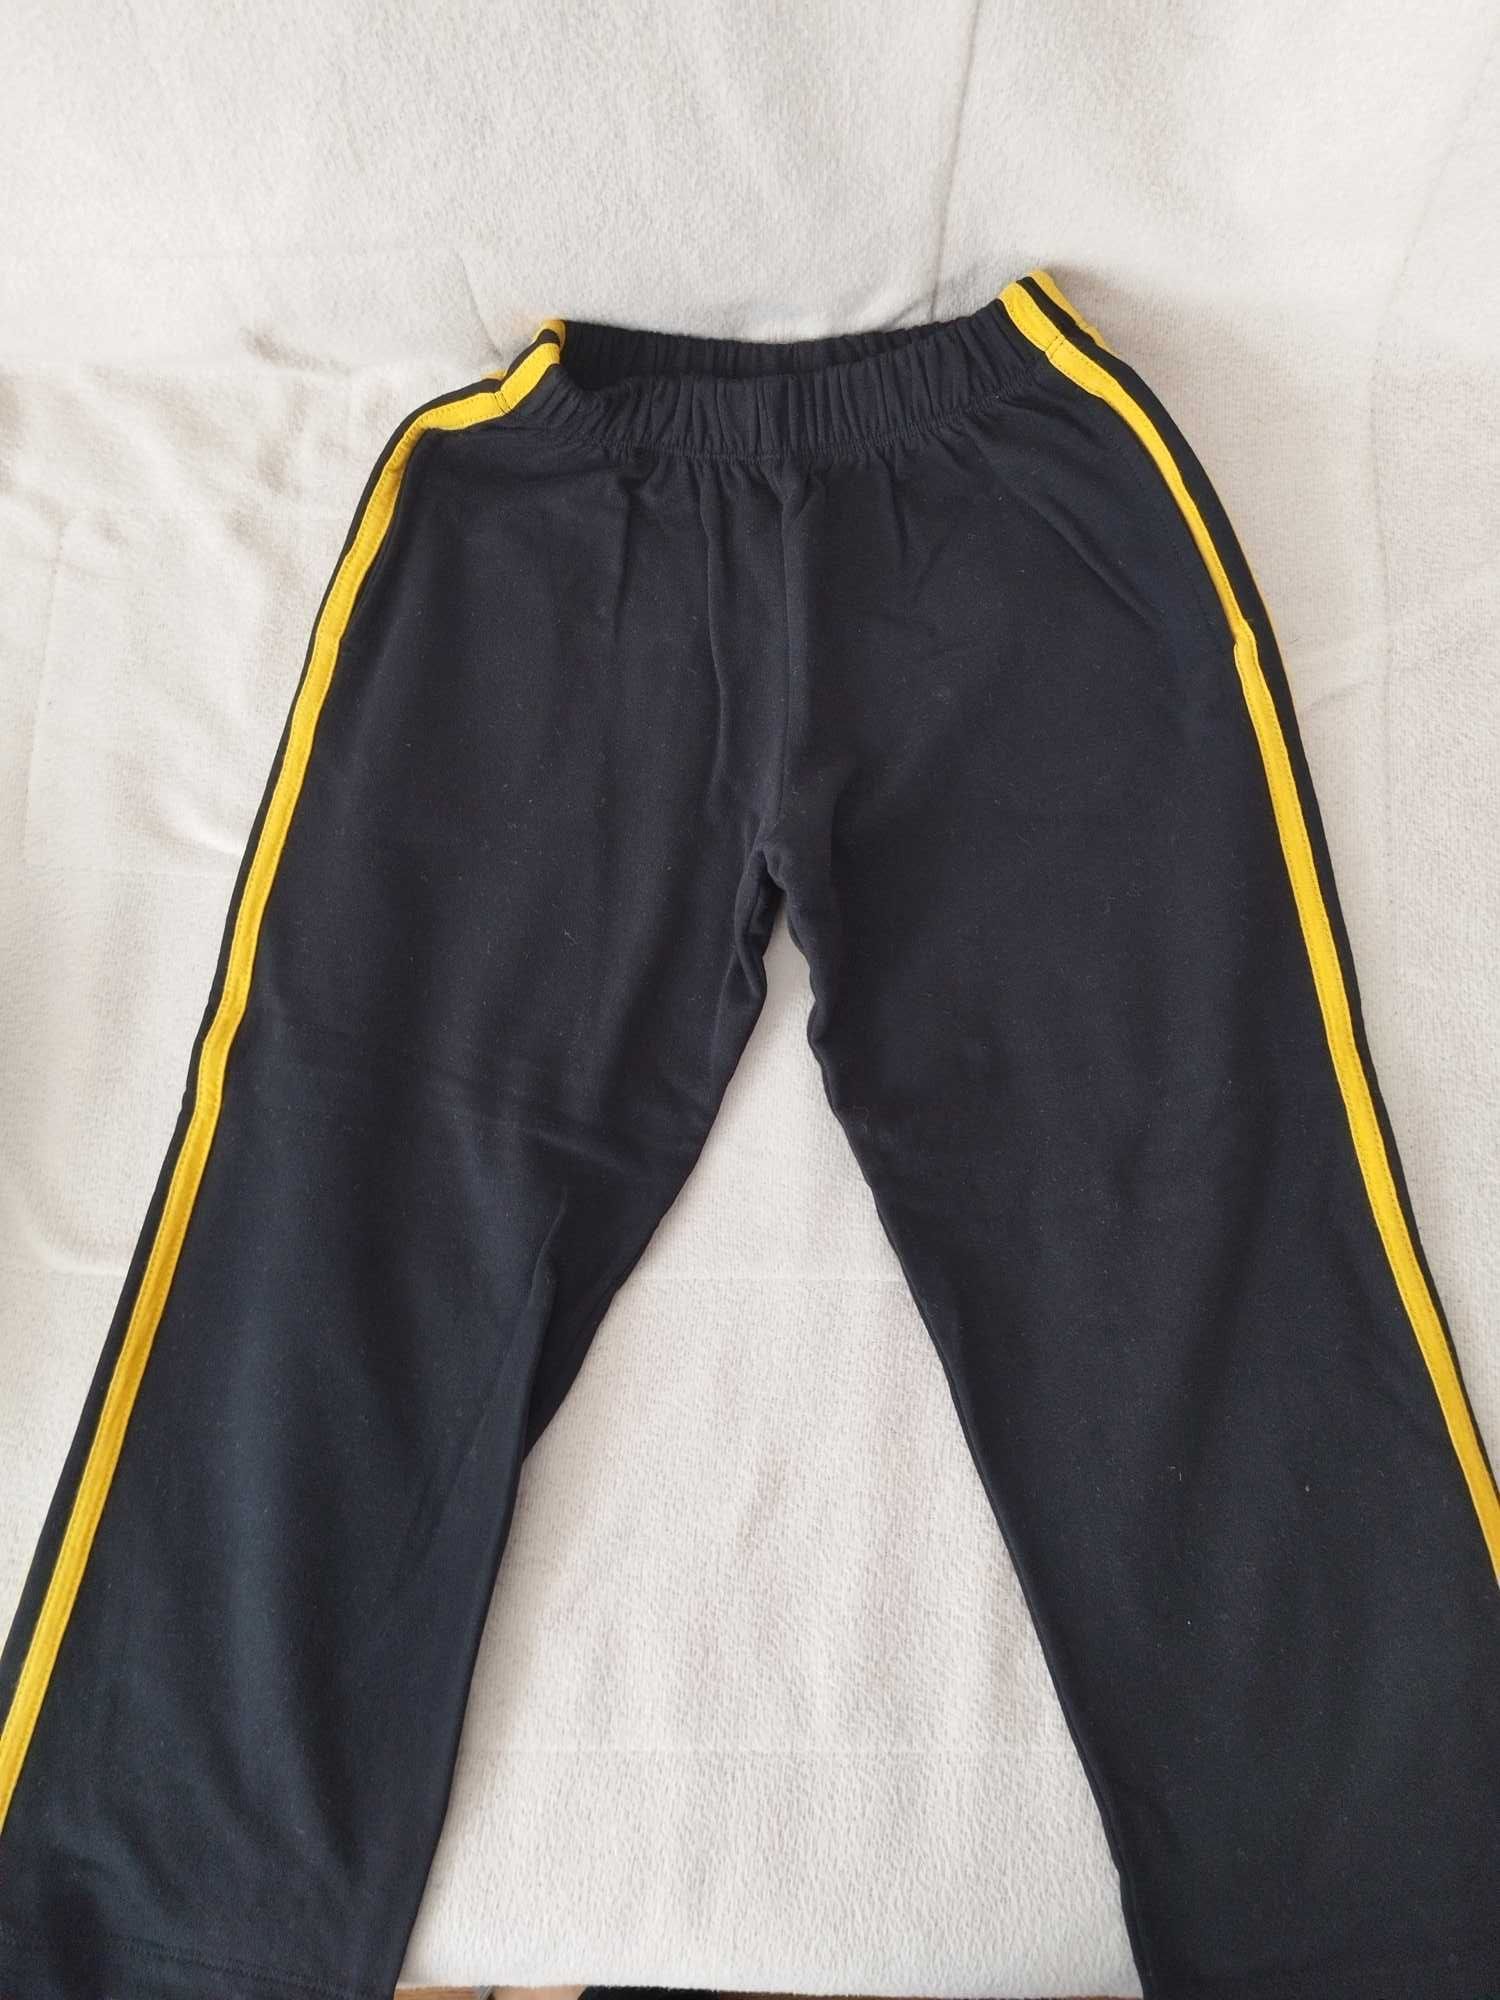 Pantaloni de trening negri cu 2 dungi galbene laterale